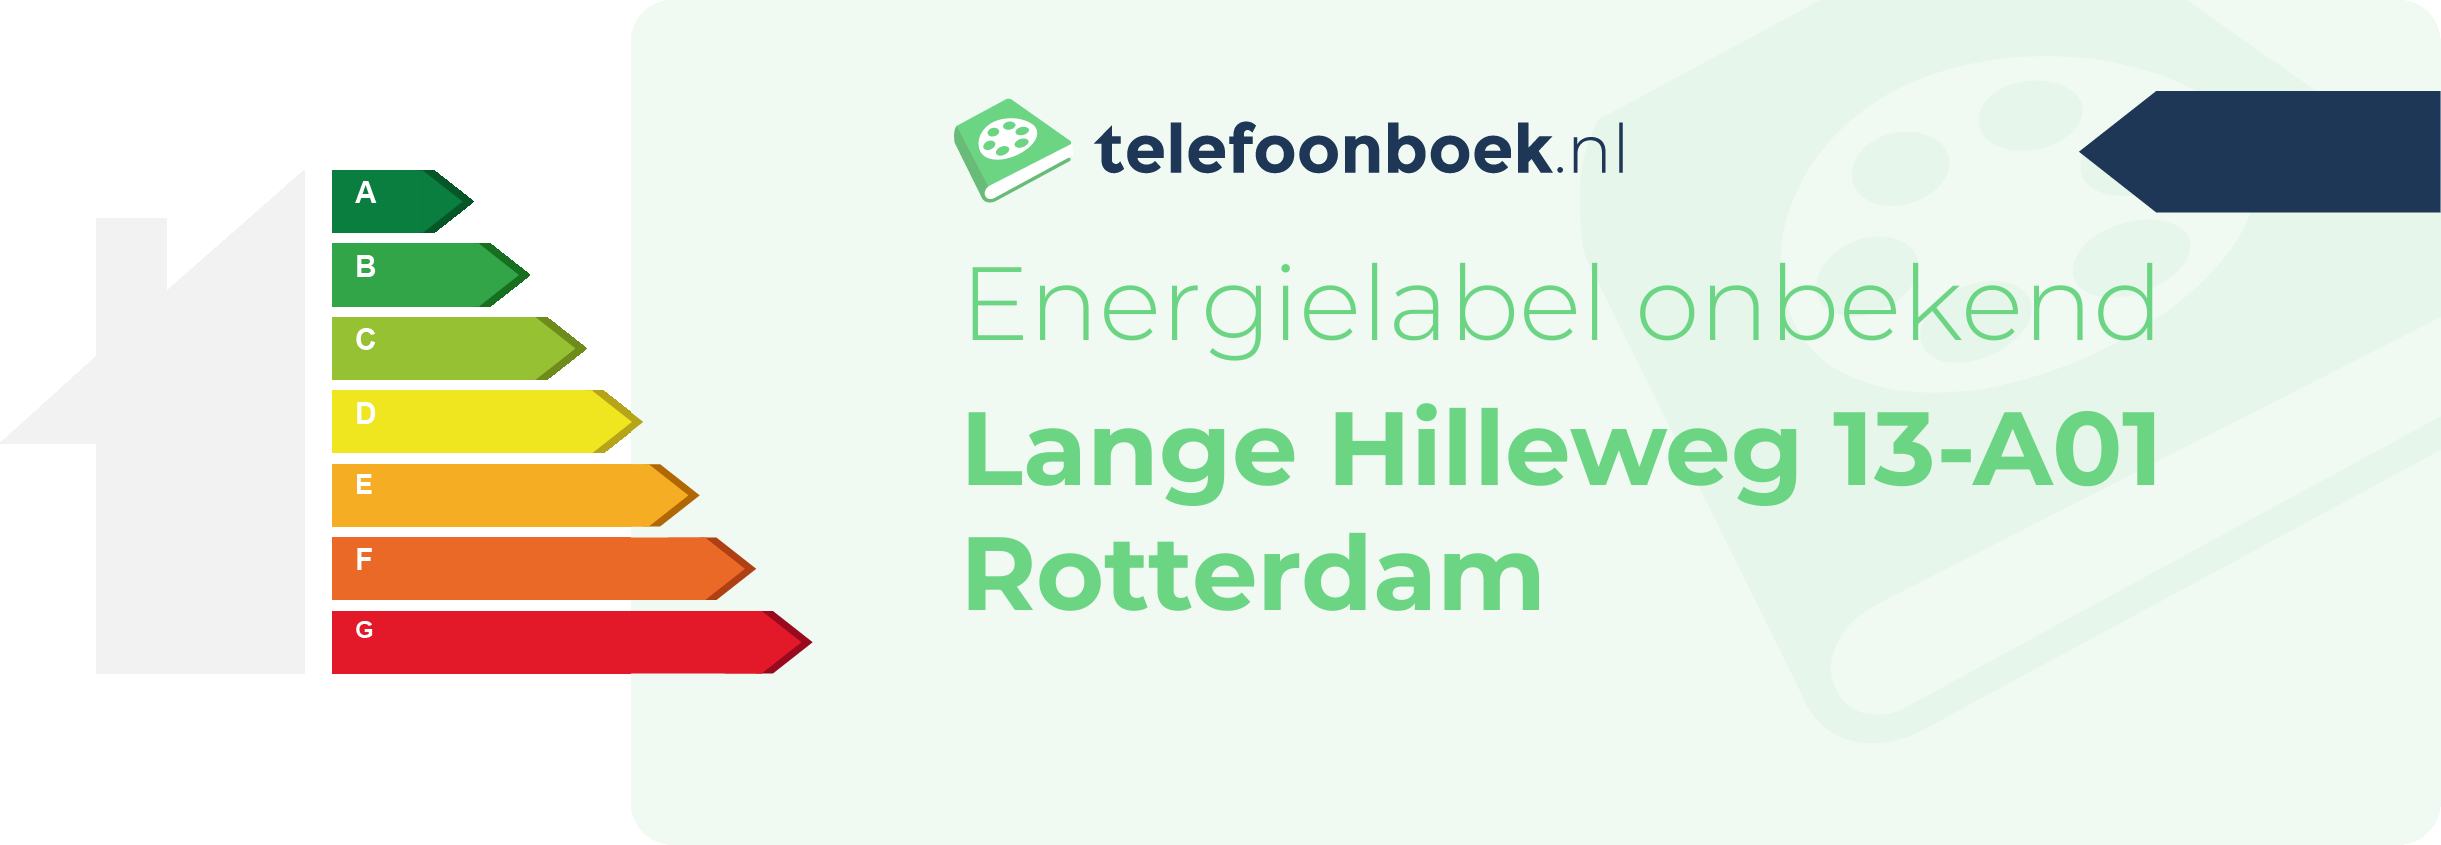 Energielabel Lange Hilleweg 13-A01 Rotterdam